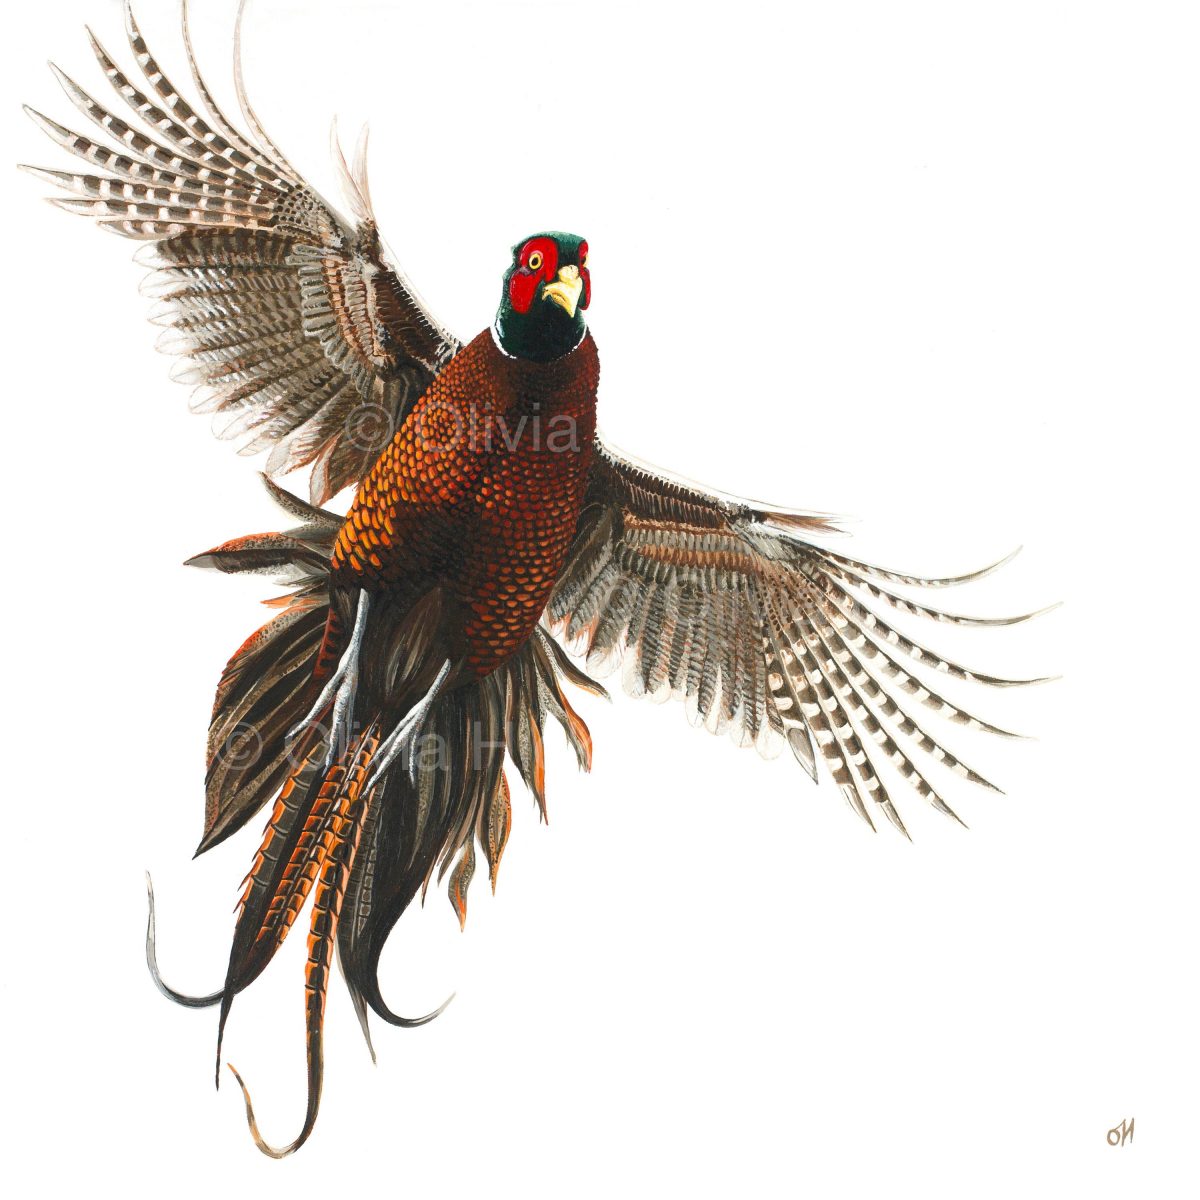 Flushed Pheasant - limited edition giclée canvas print